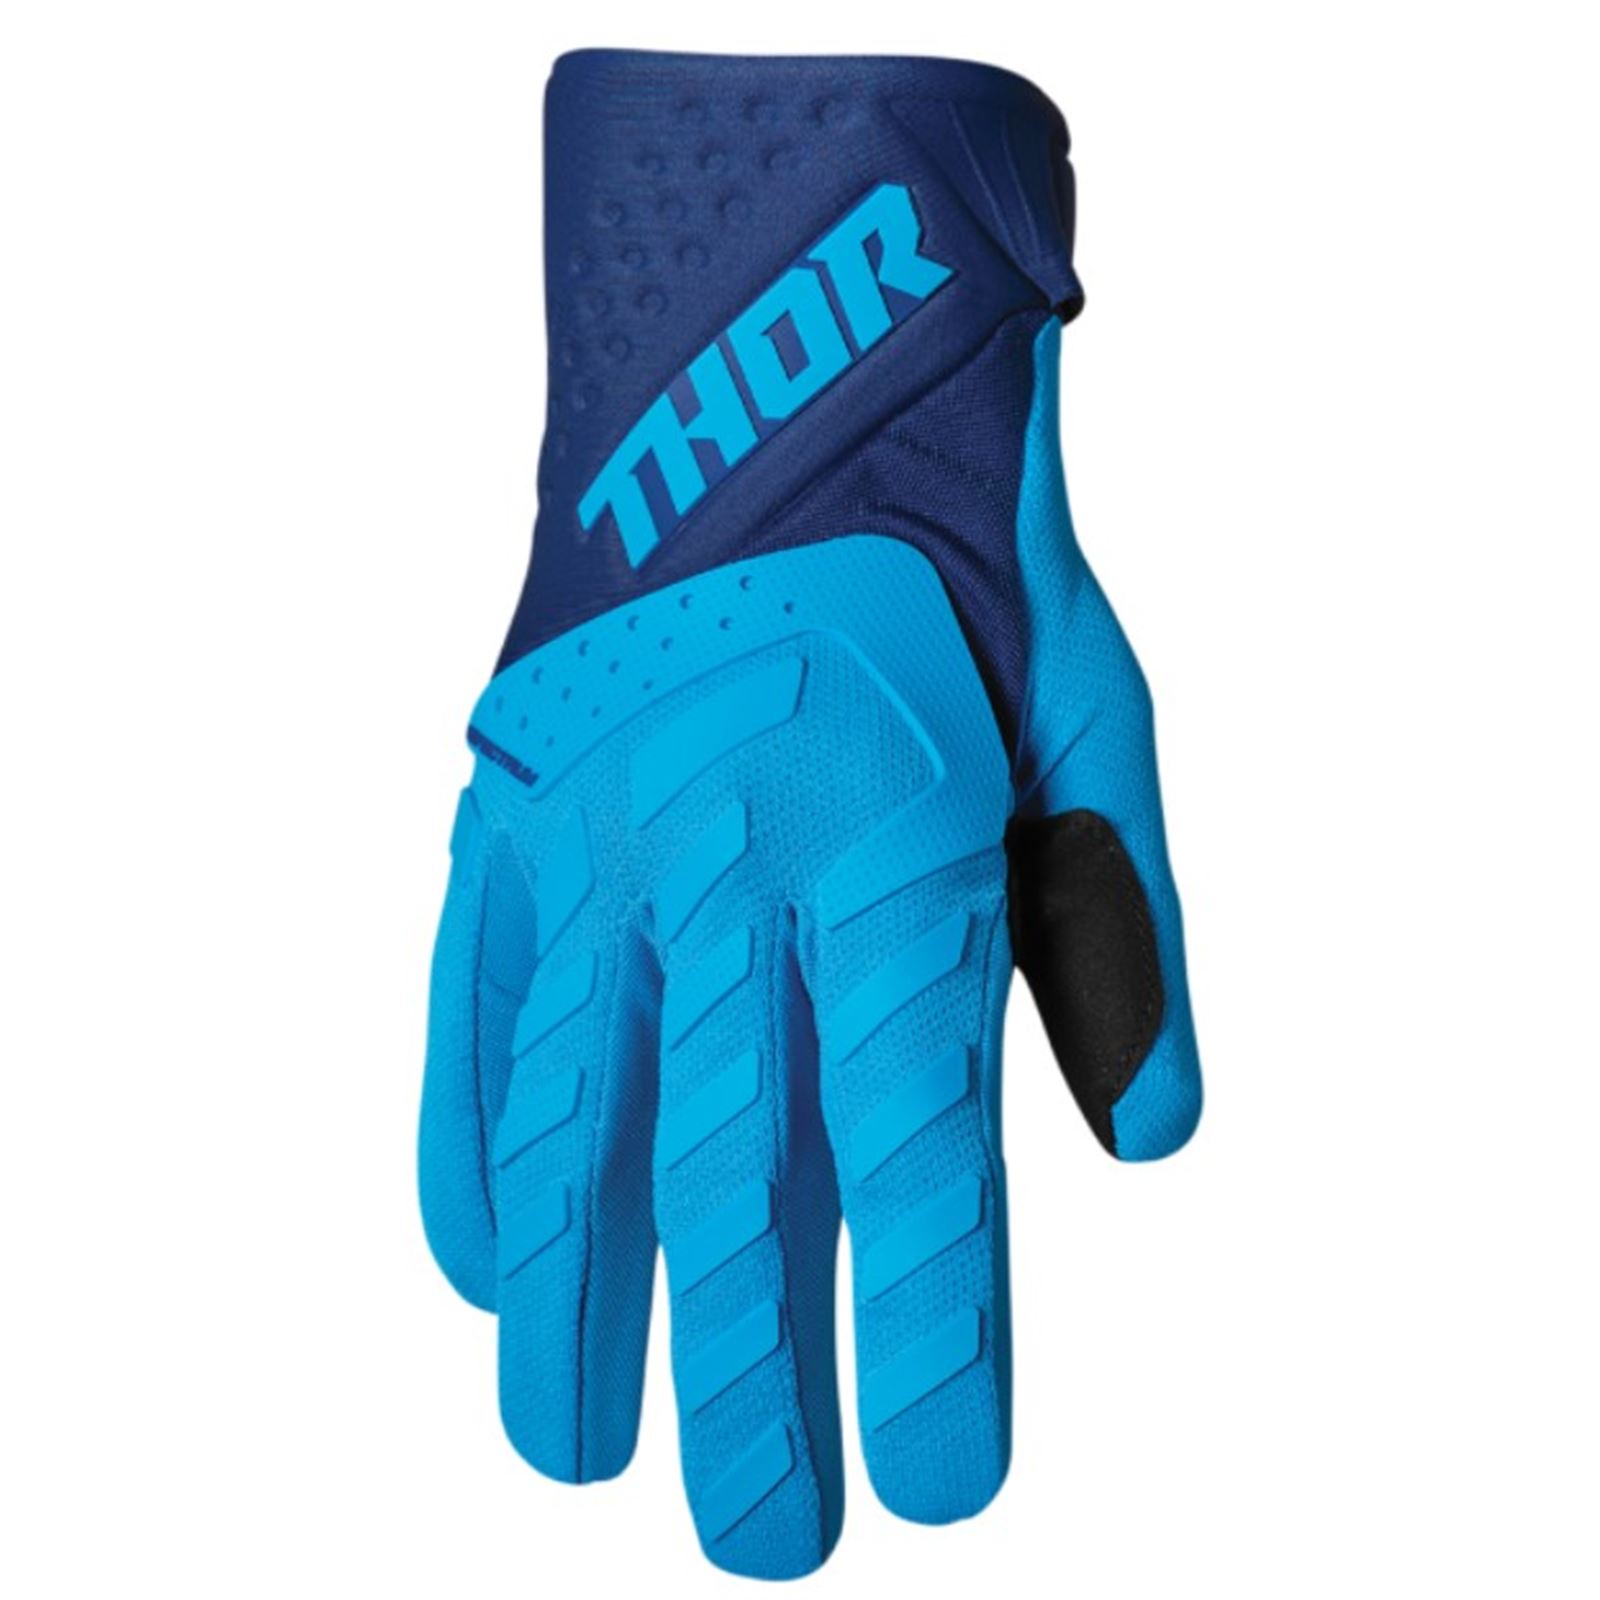 Thor Spectrum Gloves - Blue/Navy - Small